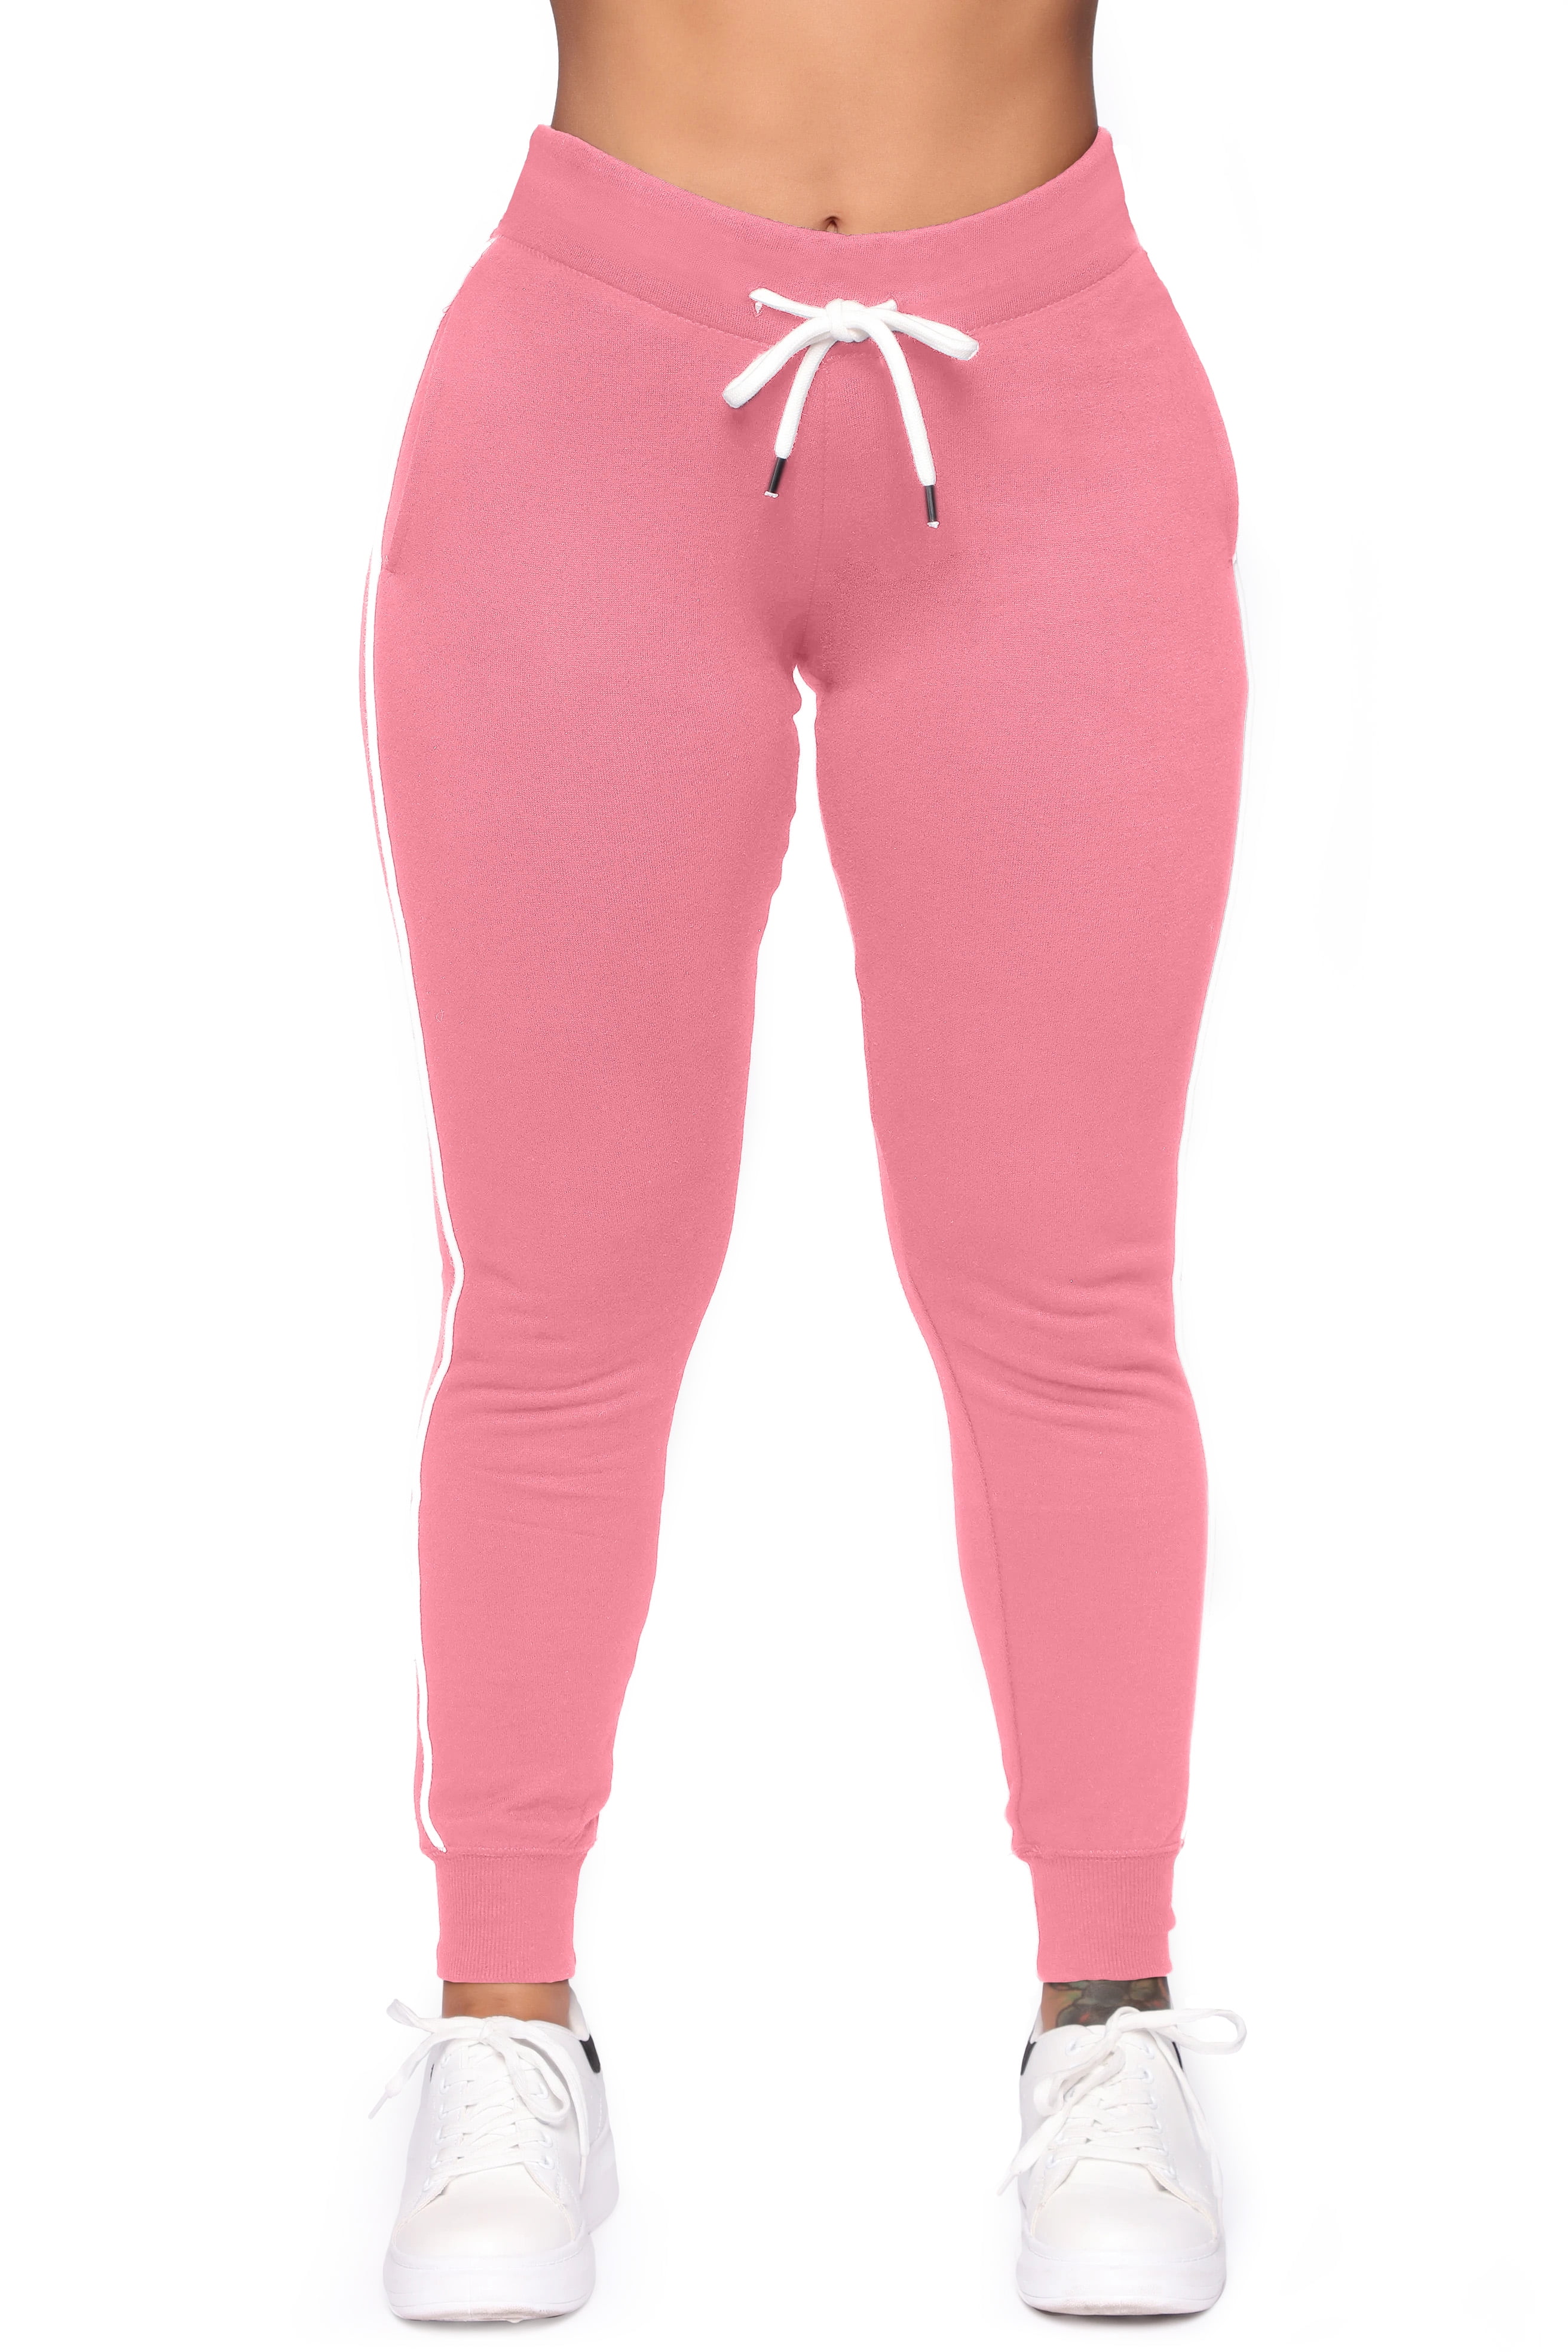 Aiyino Women L-5XL Plus Size High Waisted Sweatpants Drawstring Jogger  Pants Tapered Athletic Workout Yoga Lounge Pants 